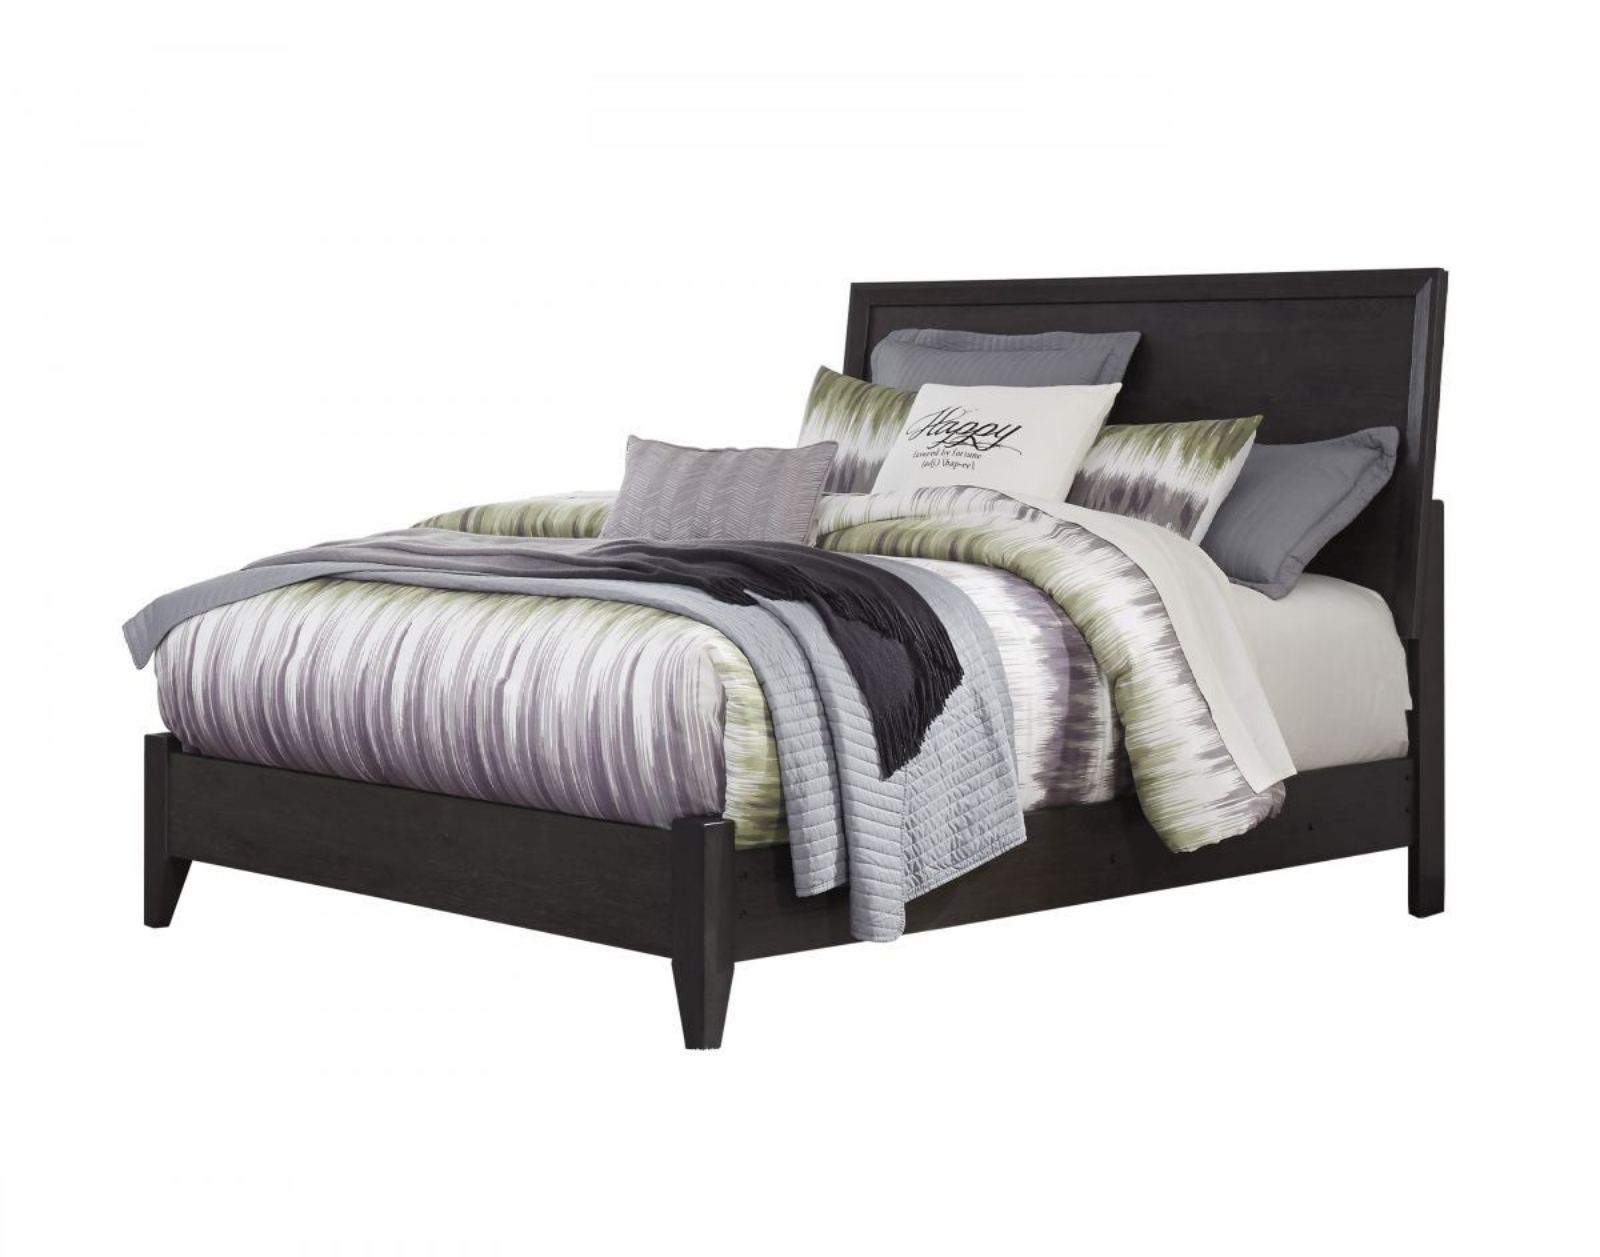 Picture of Daltori Queen Size Bed